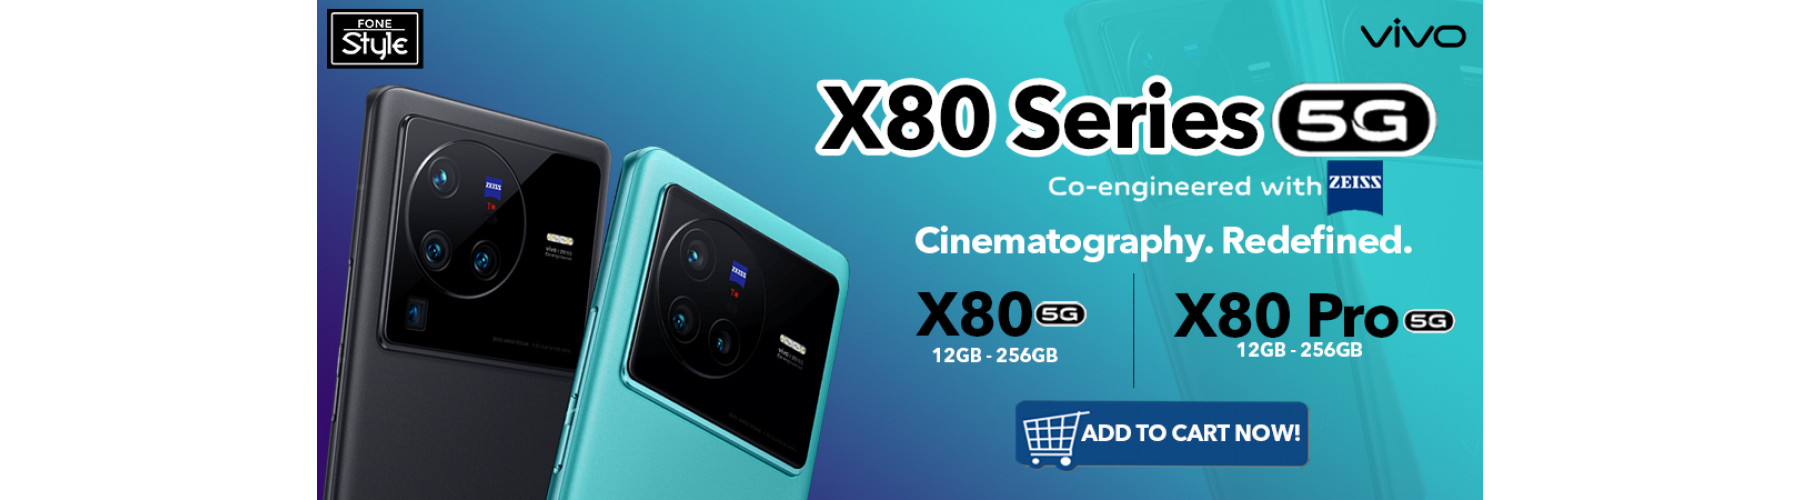 Vivo X80 series